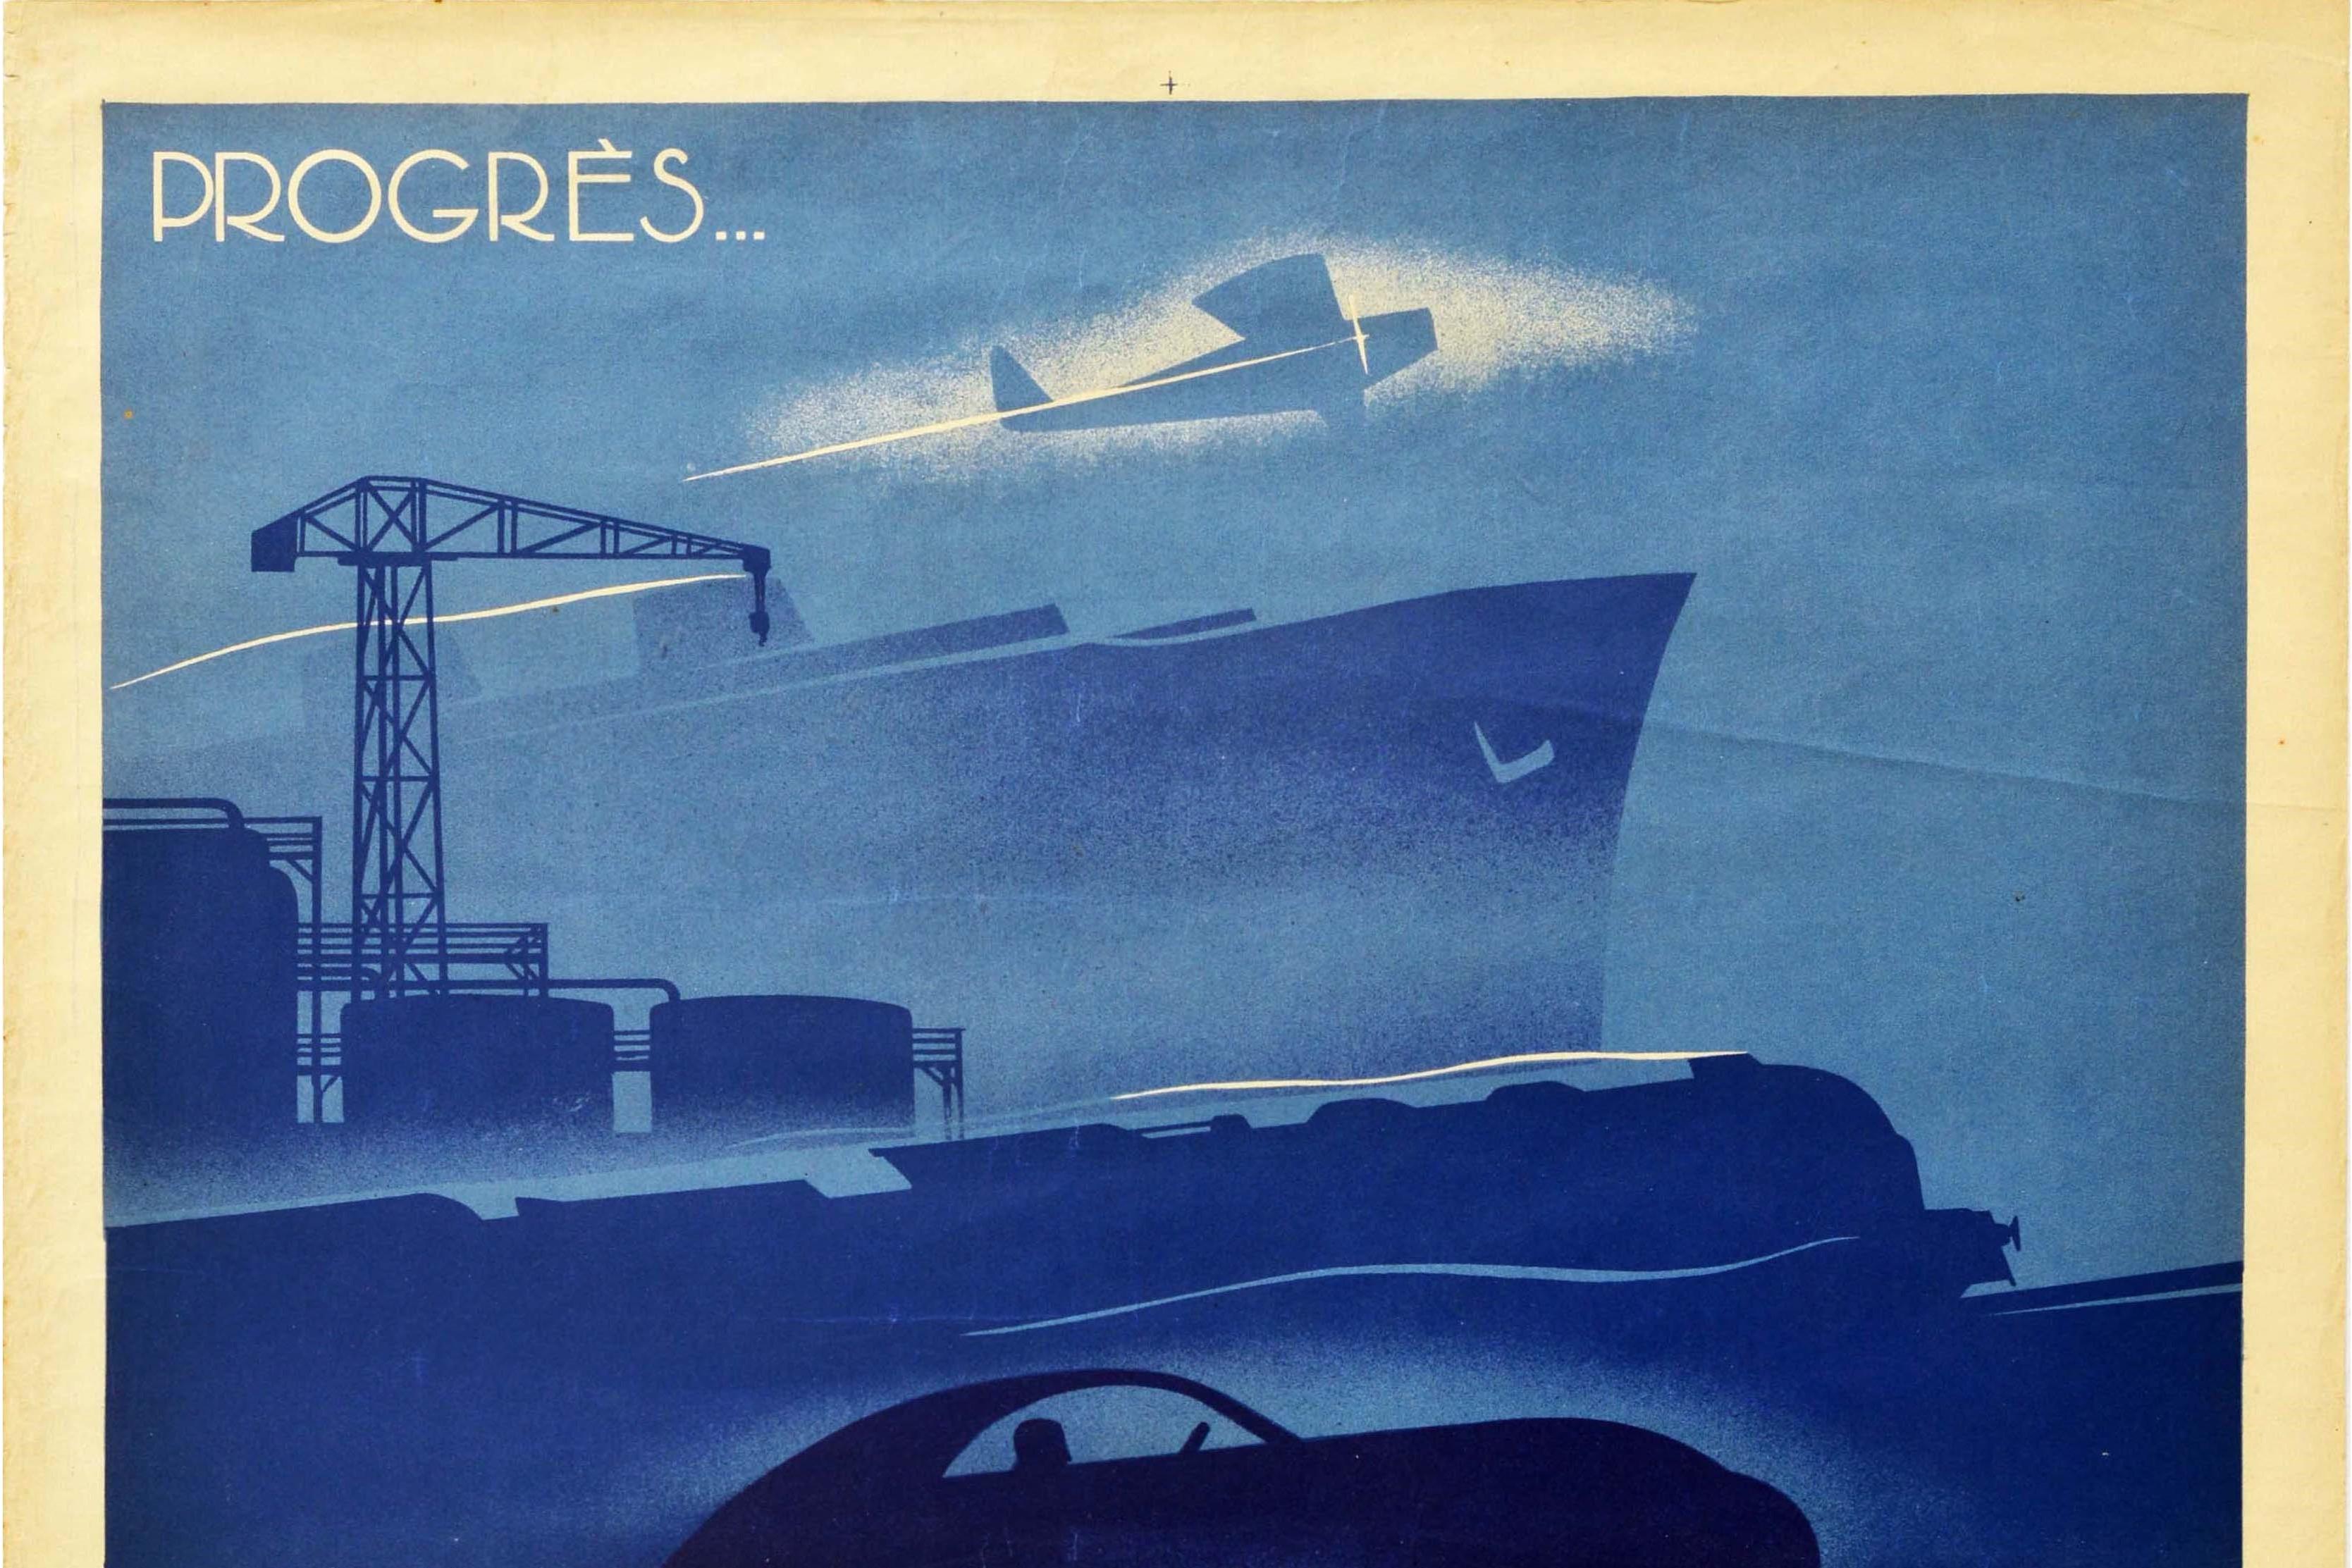 Original Vintage Poster Welding Progress Today Car Boat Plane Train Art Industry - Print by Edmond Maurus